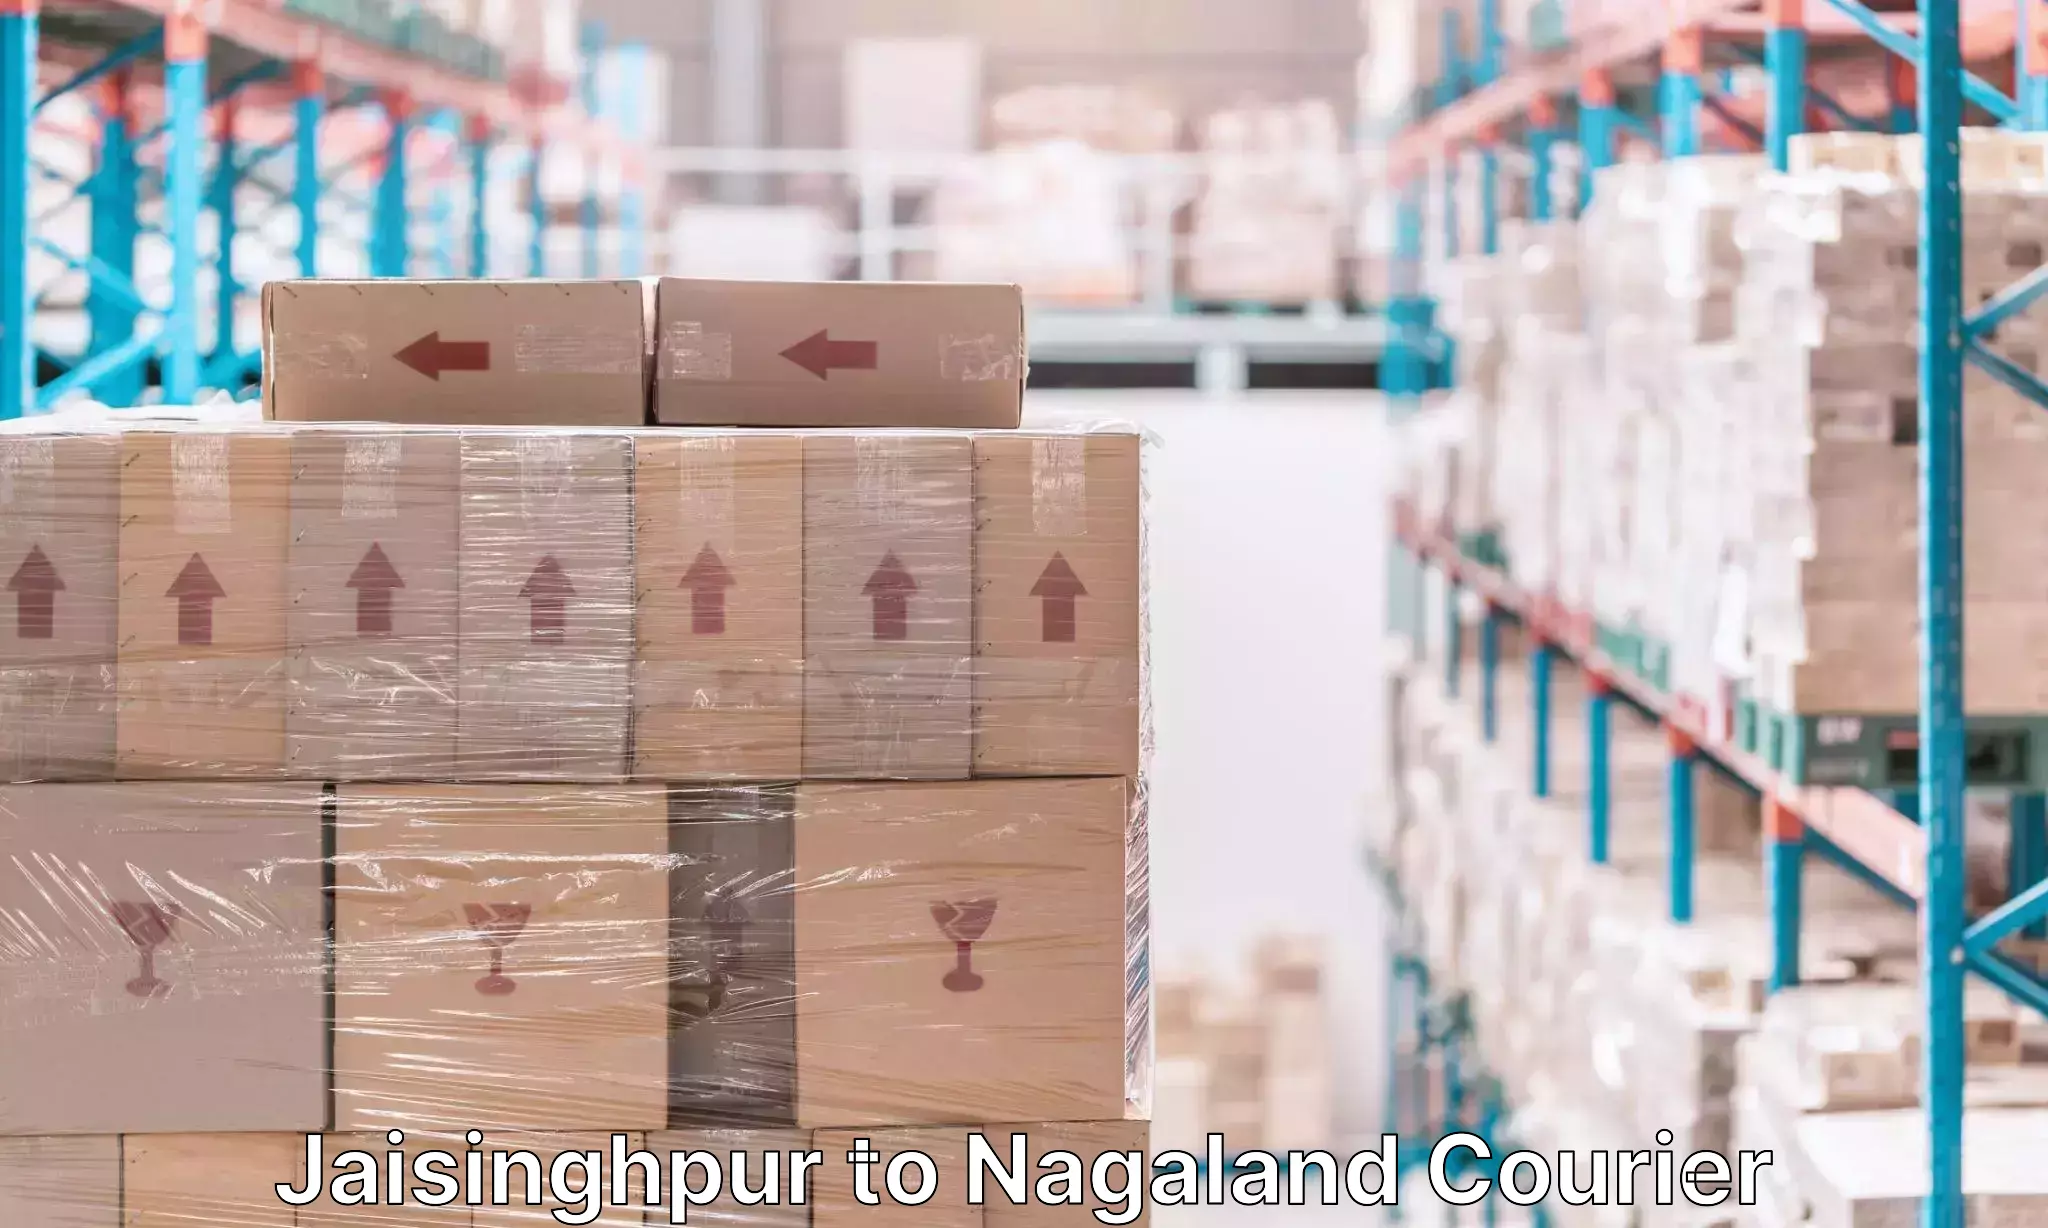 Urgent luggage shipment in Jaisinghpur to Nagaland